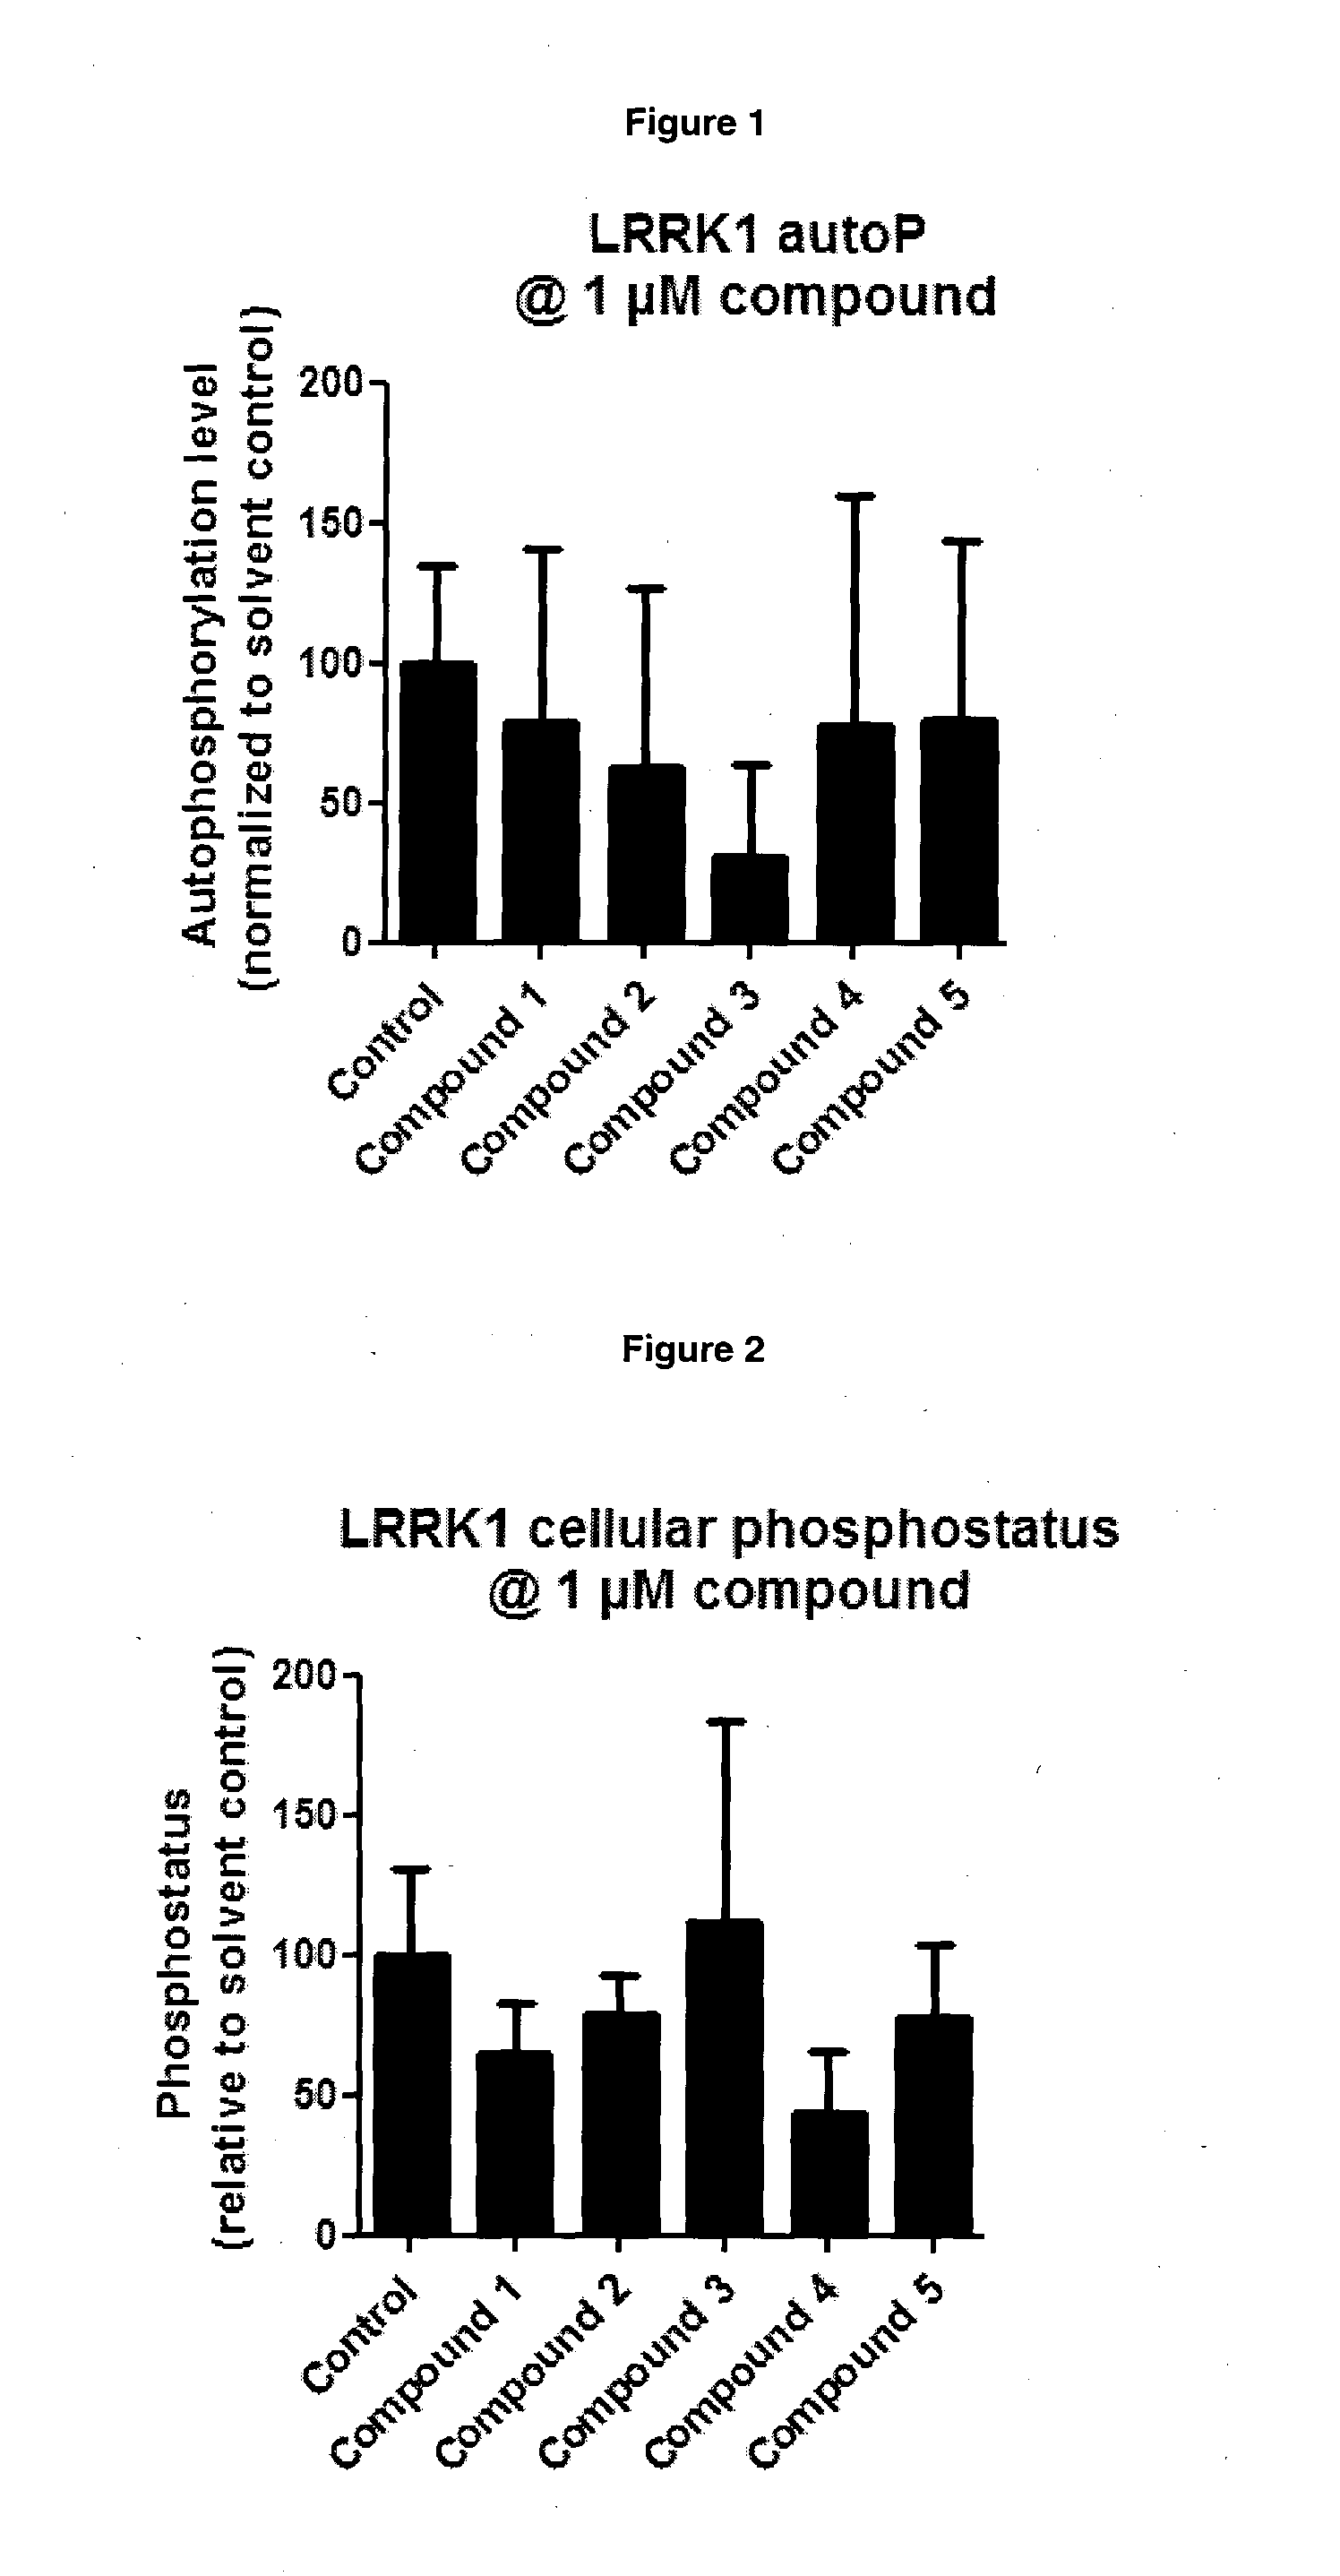 Macrocyclic LRRK2 kinase inhibitors